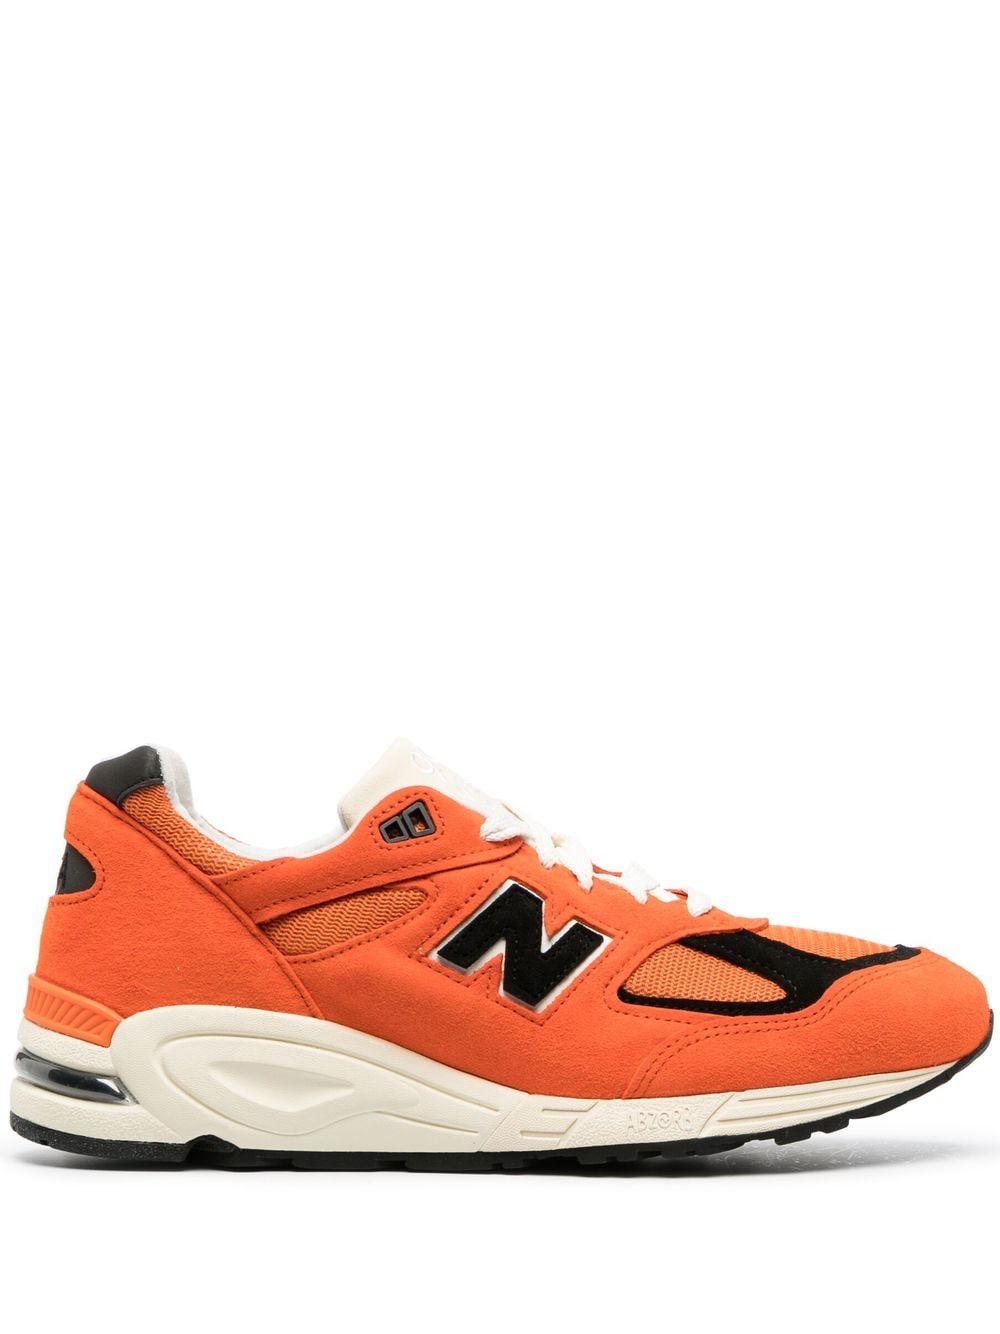 New Balance Made in USA sneakers - Orange von New Balance